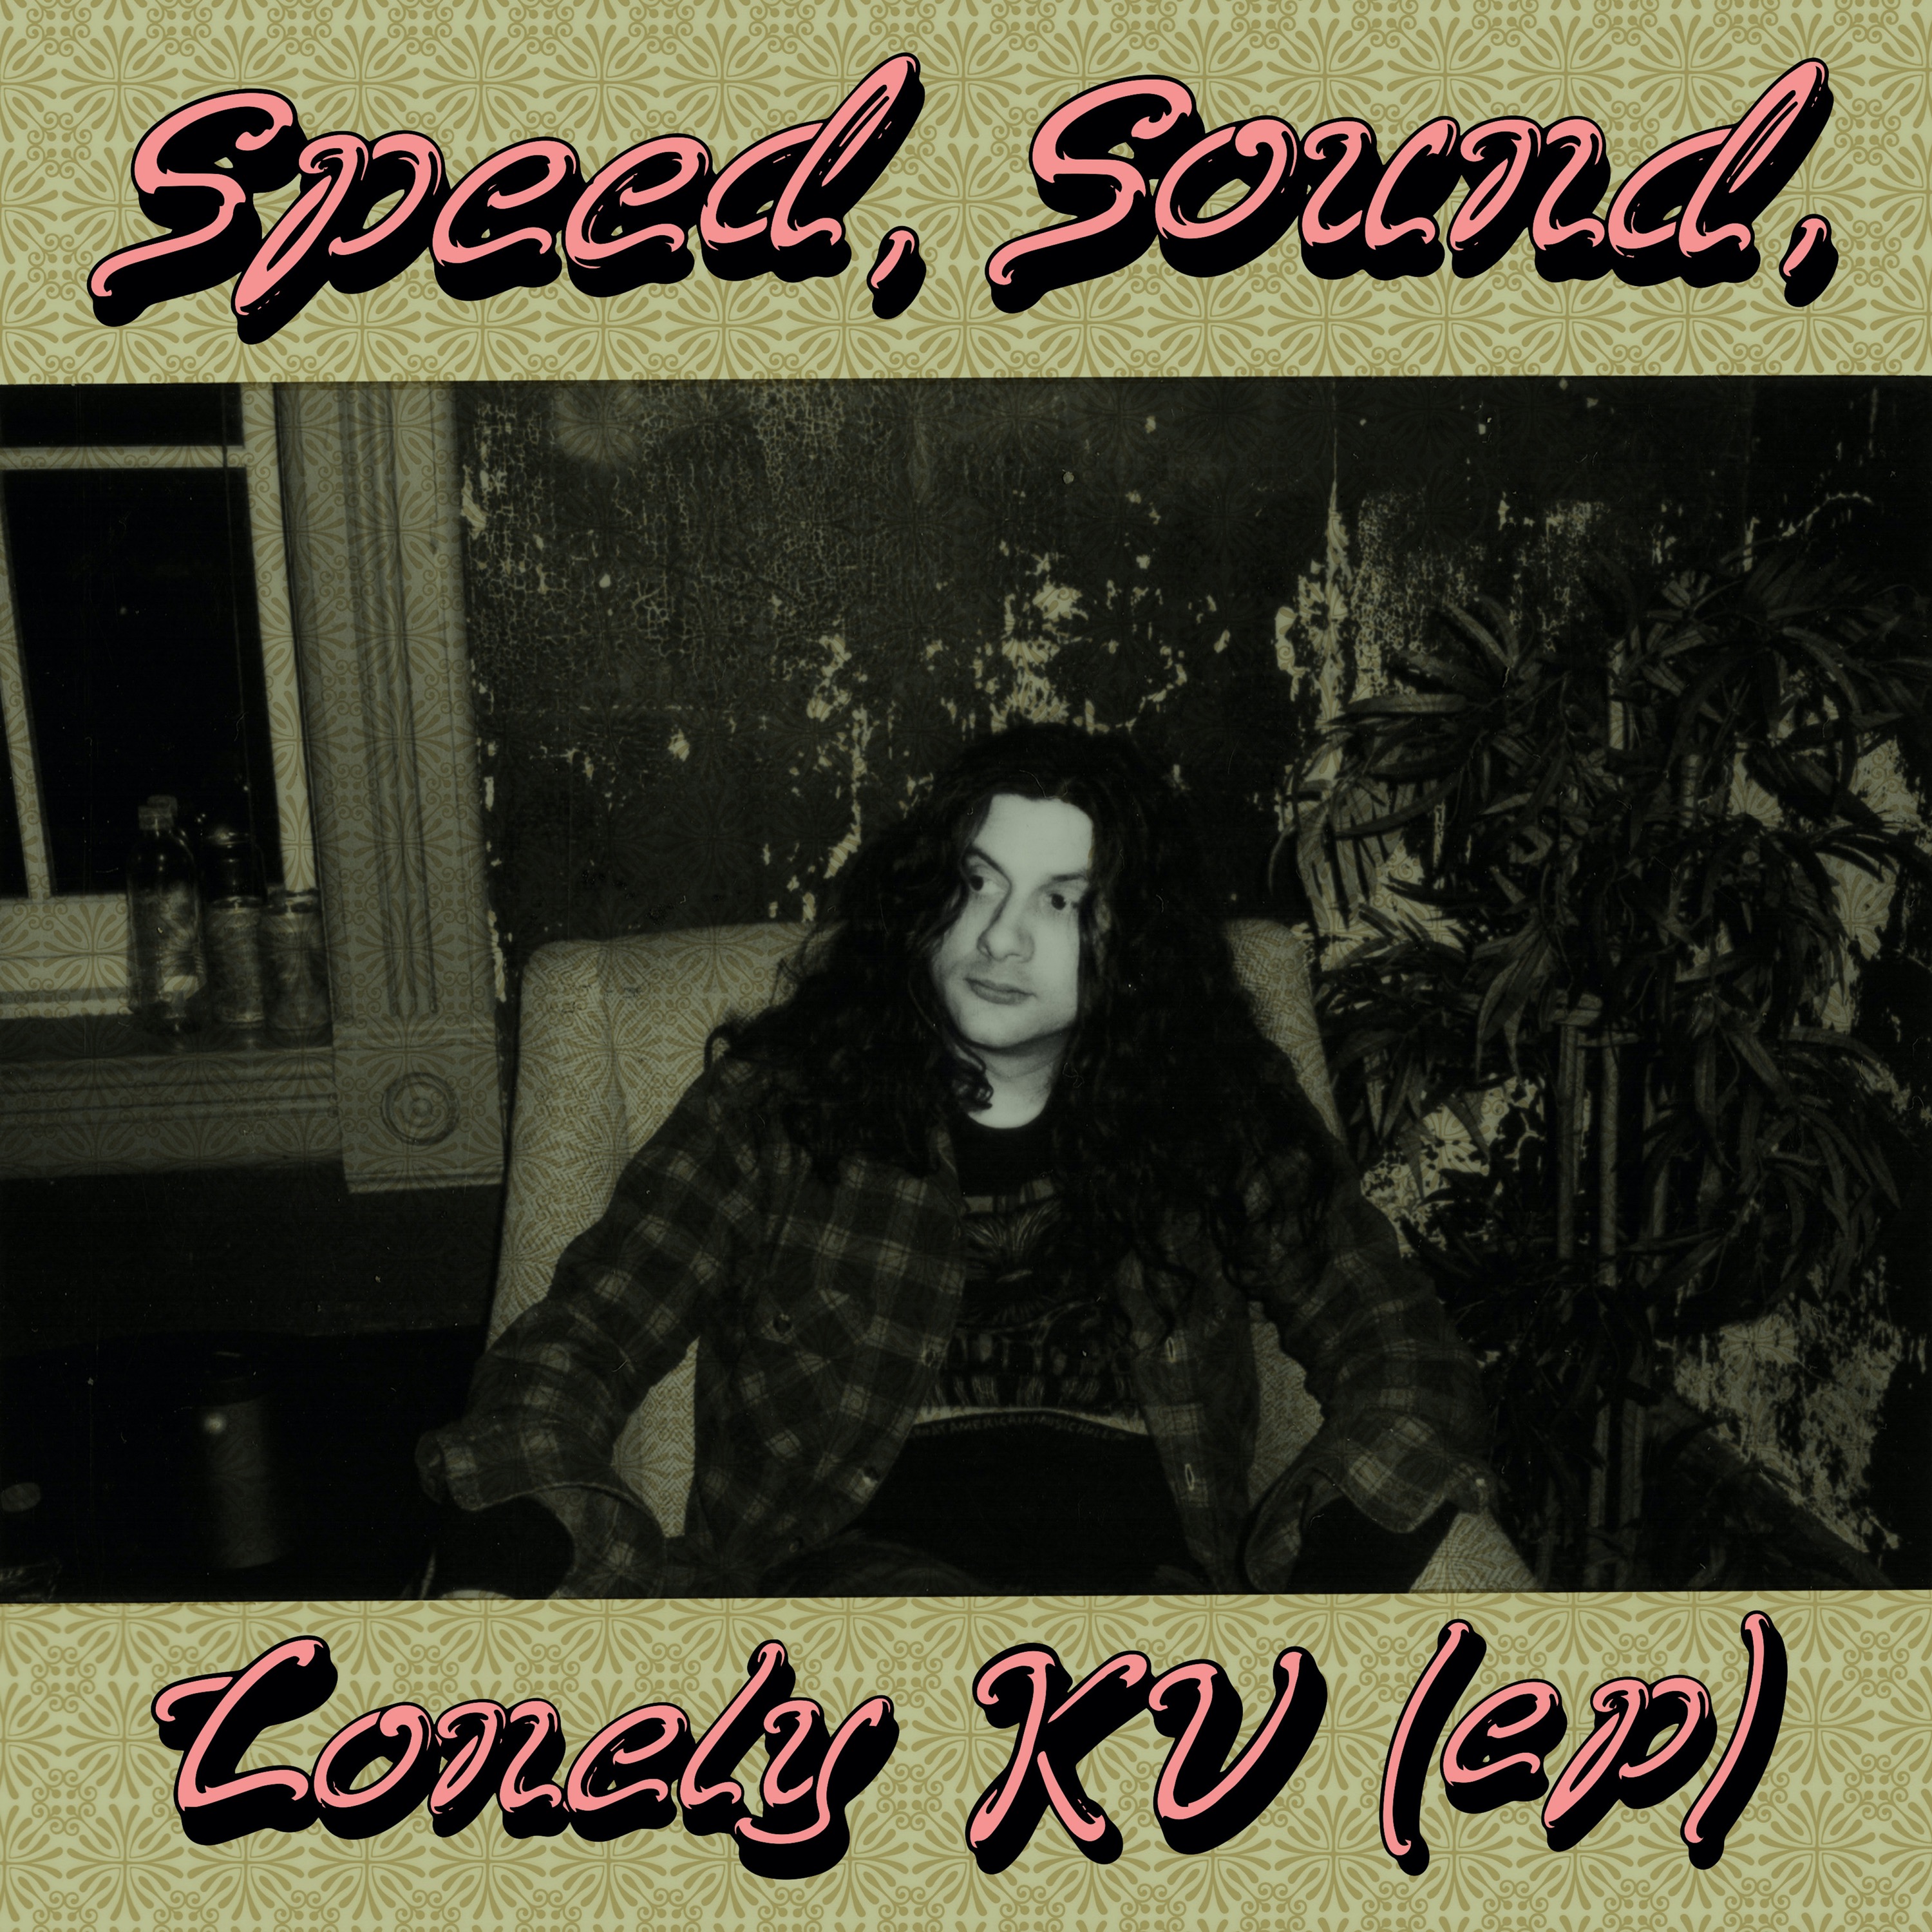 Kurt Vile - Speed, Sound, Lonely KV (ep) - CDS